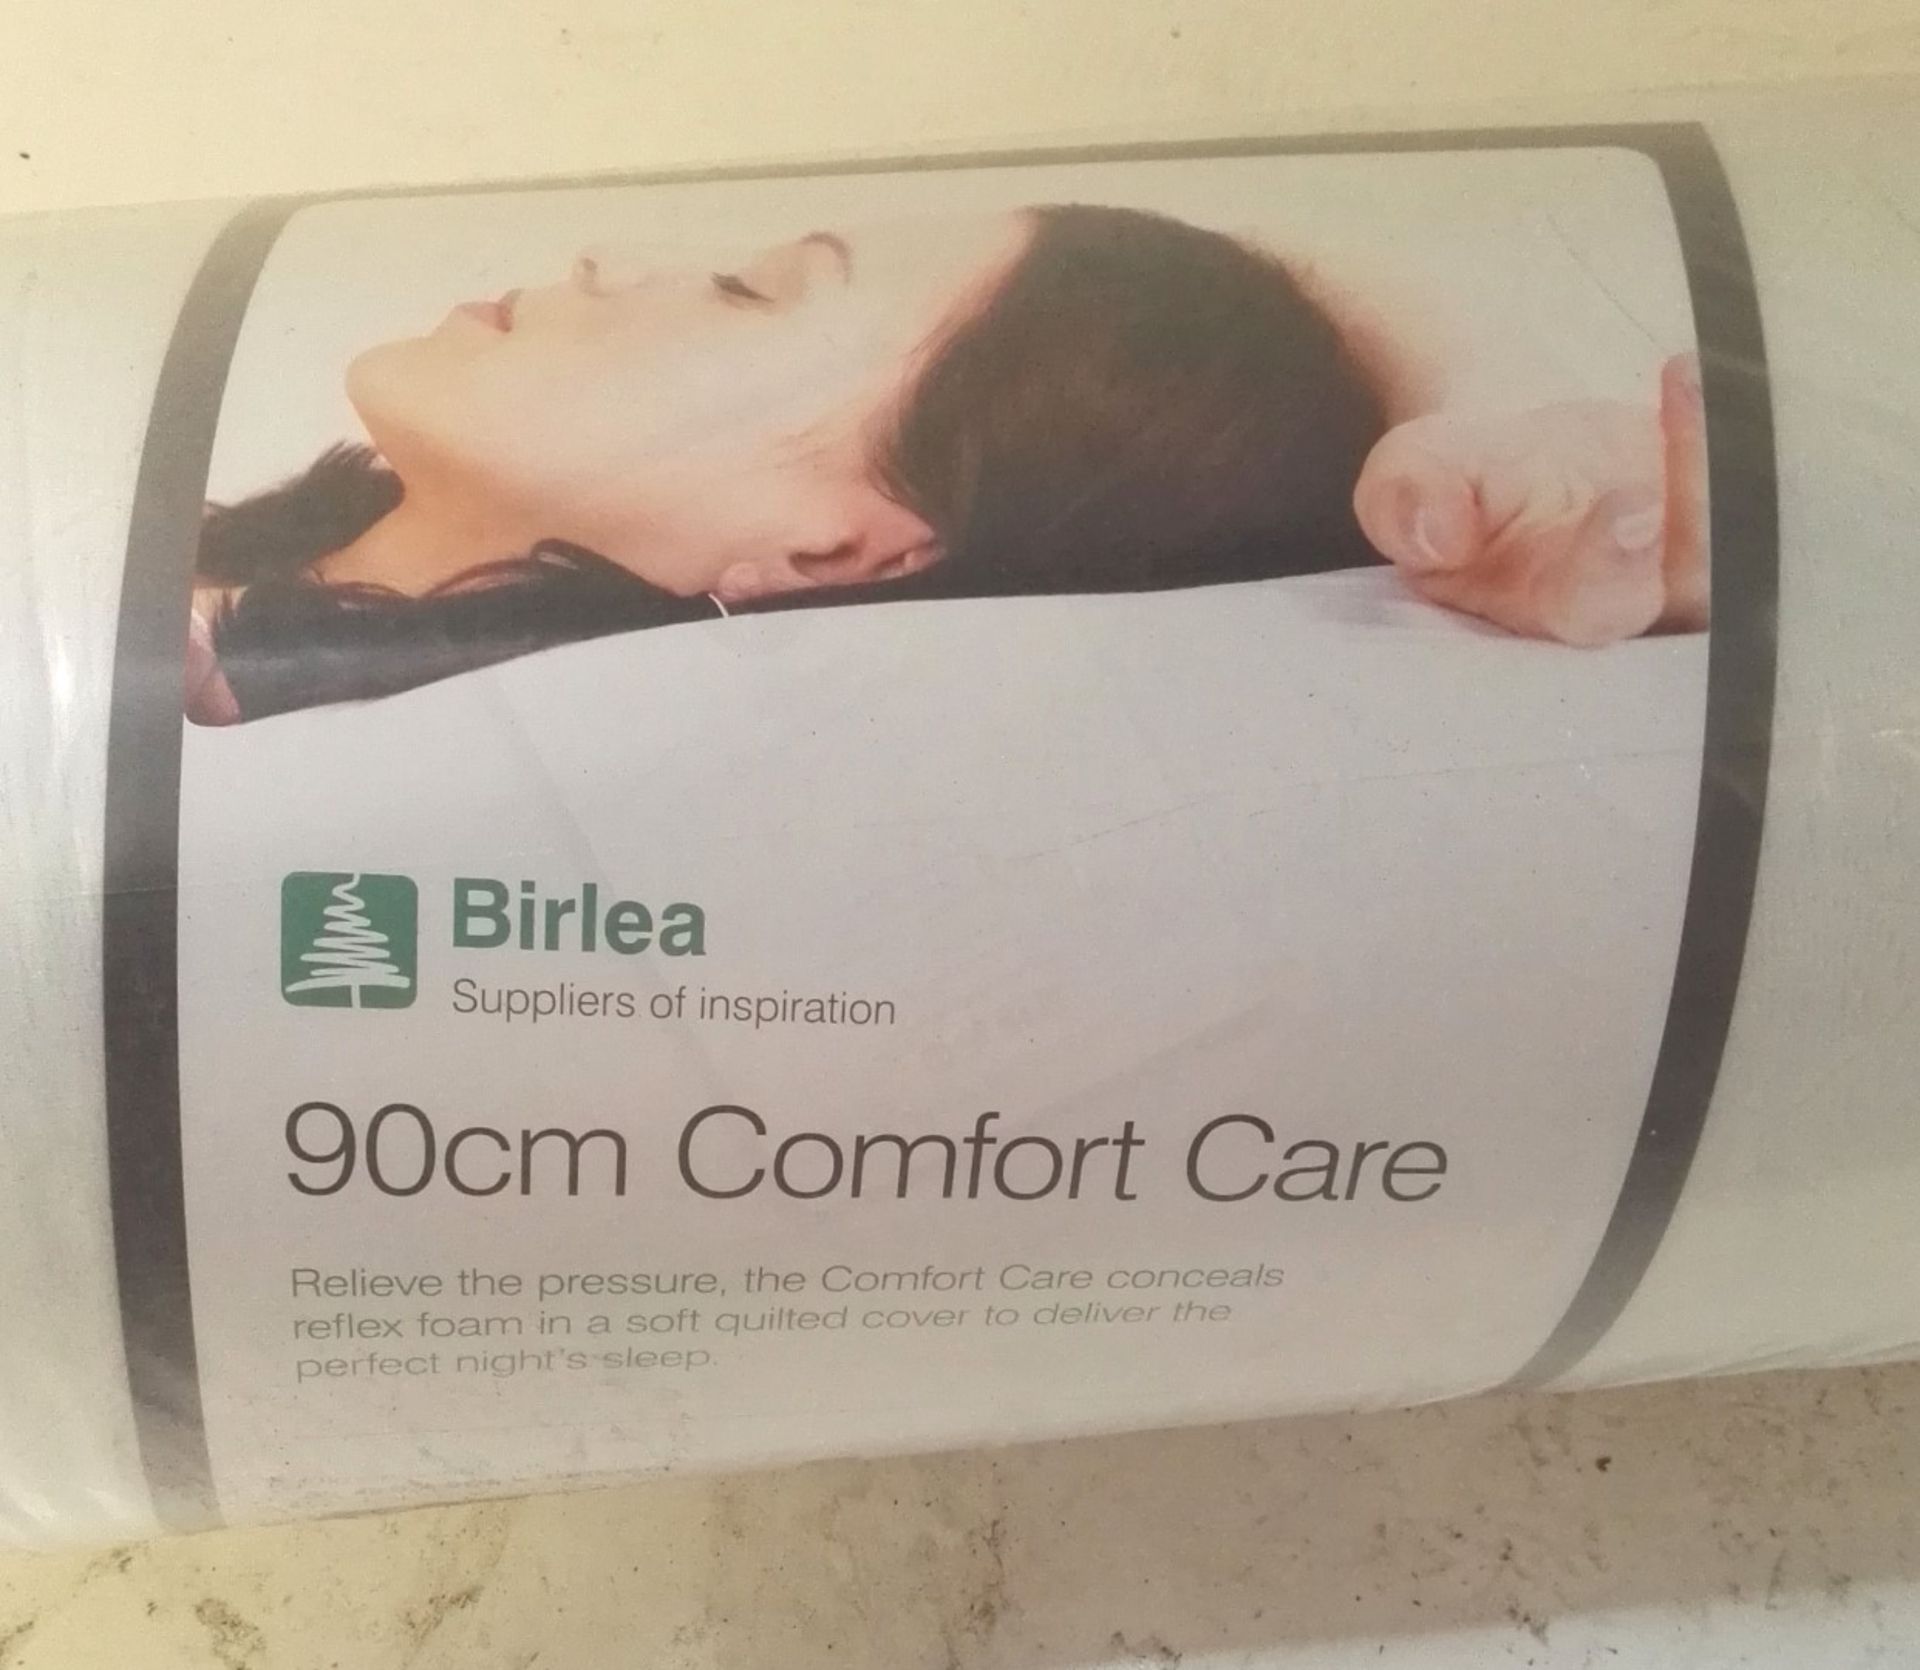 10 x Birlea 90cm Comfort Care Firm Rolled Up Reflex Foam Single Mattress - Brand New Stock - CL286 -